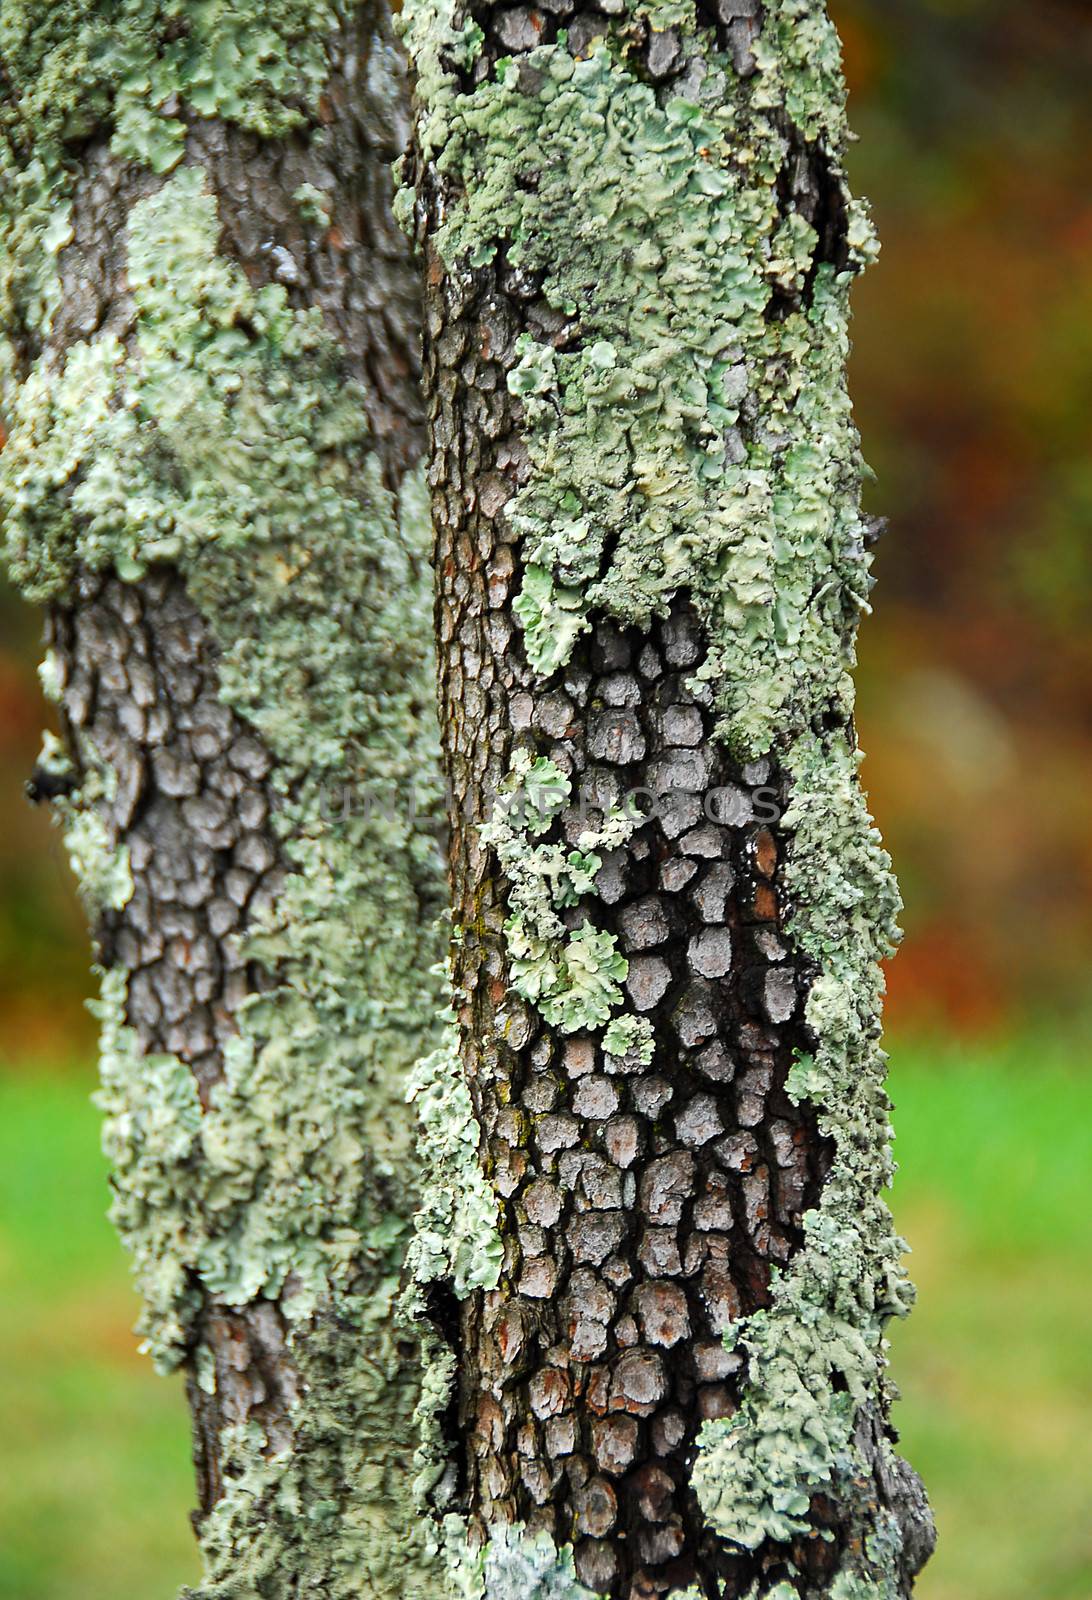 green Lichen growing on a tree trunk